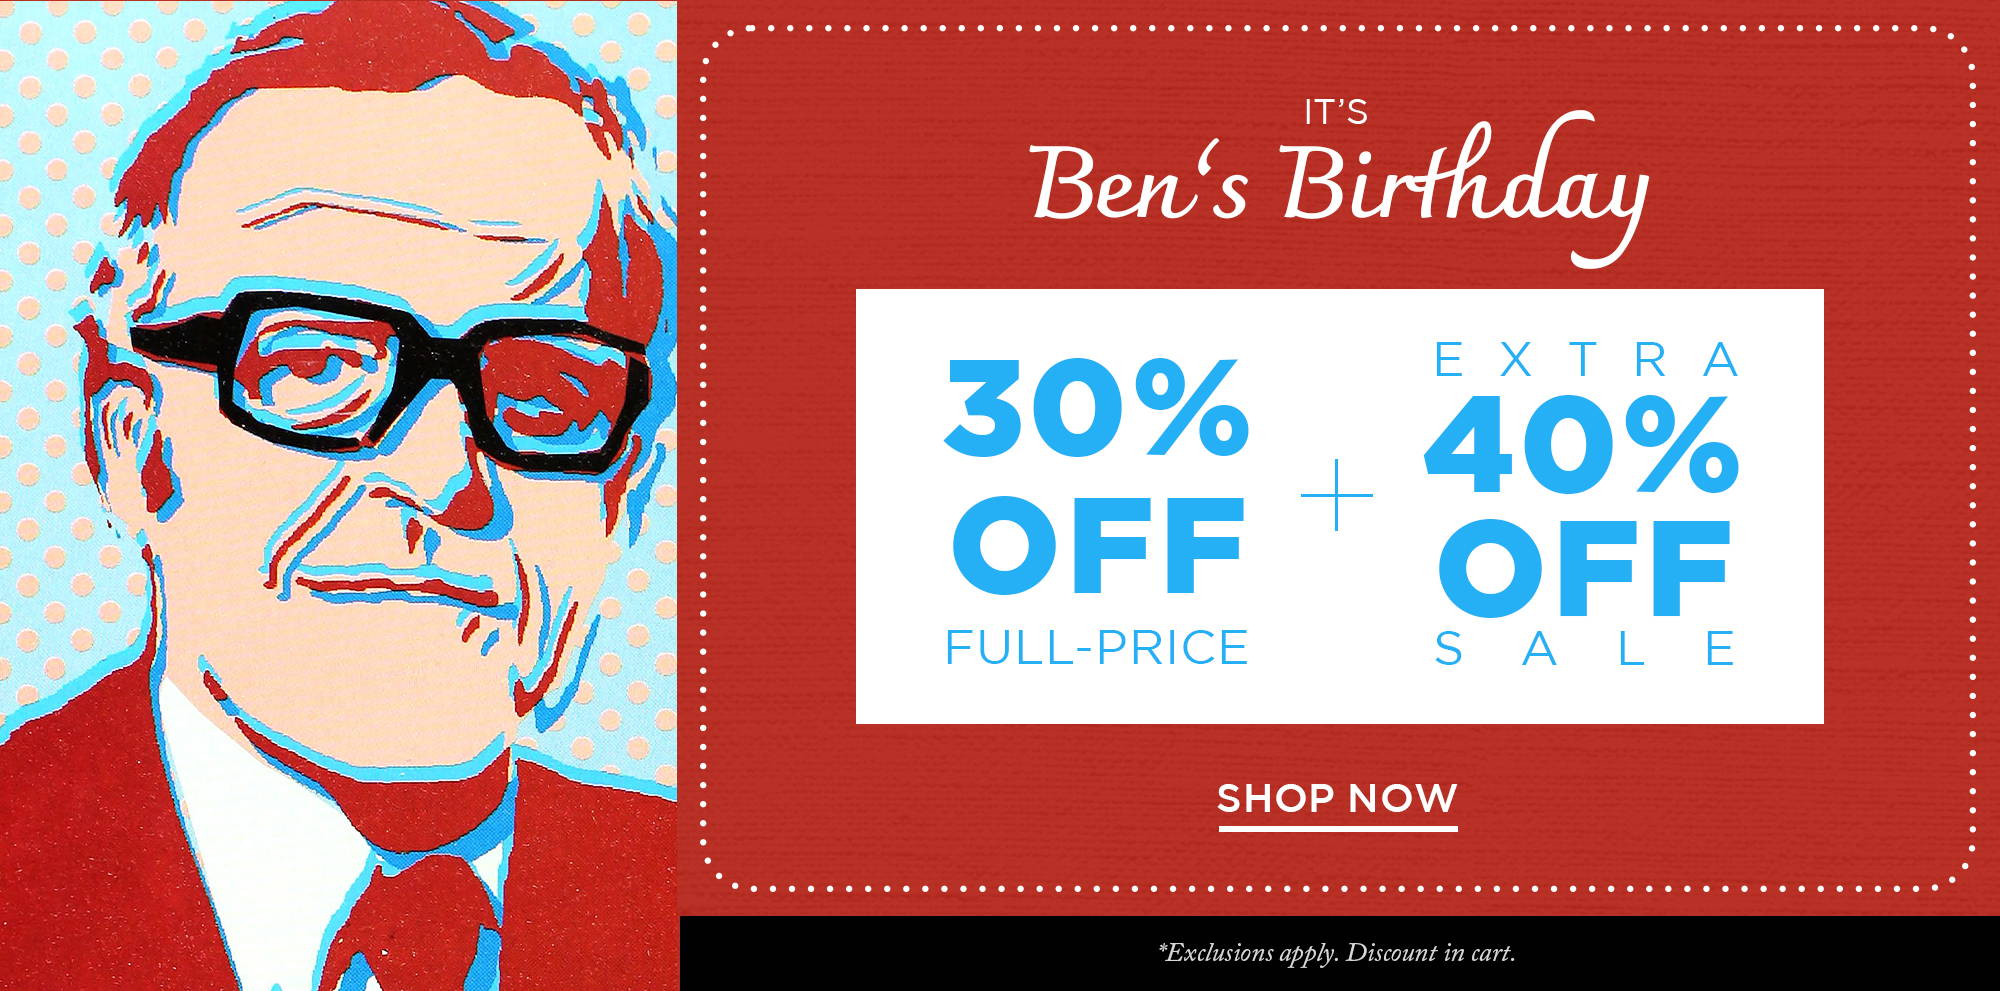 It's Ben's Birthday | 30% Off Full-Price + Extra 40% Off Sale | Shop Now